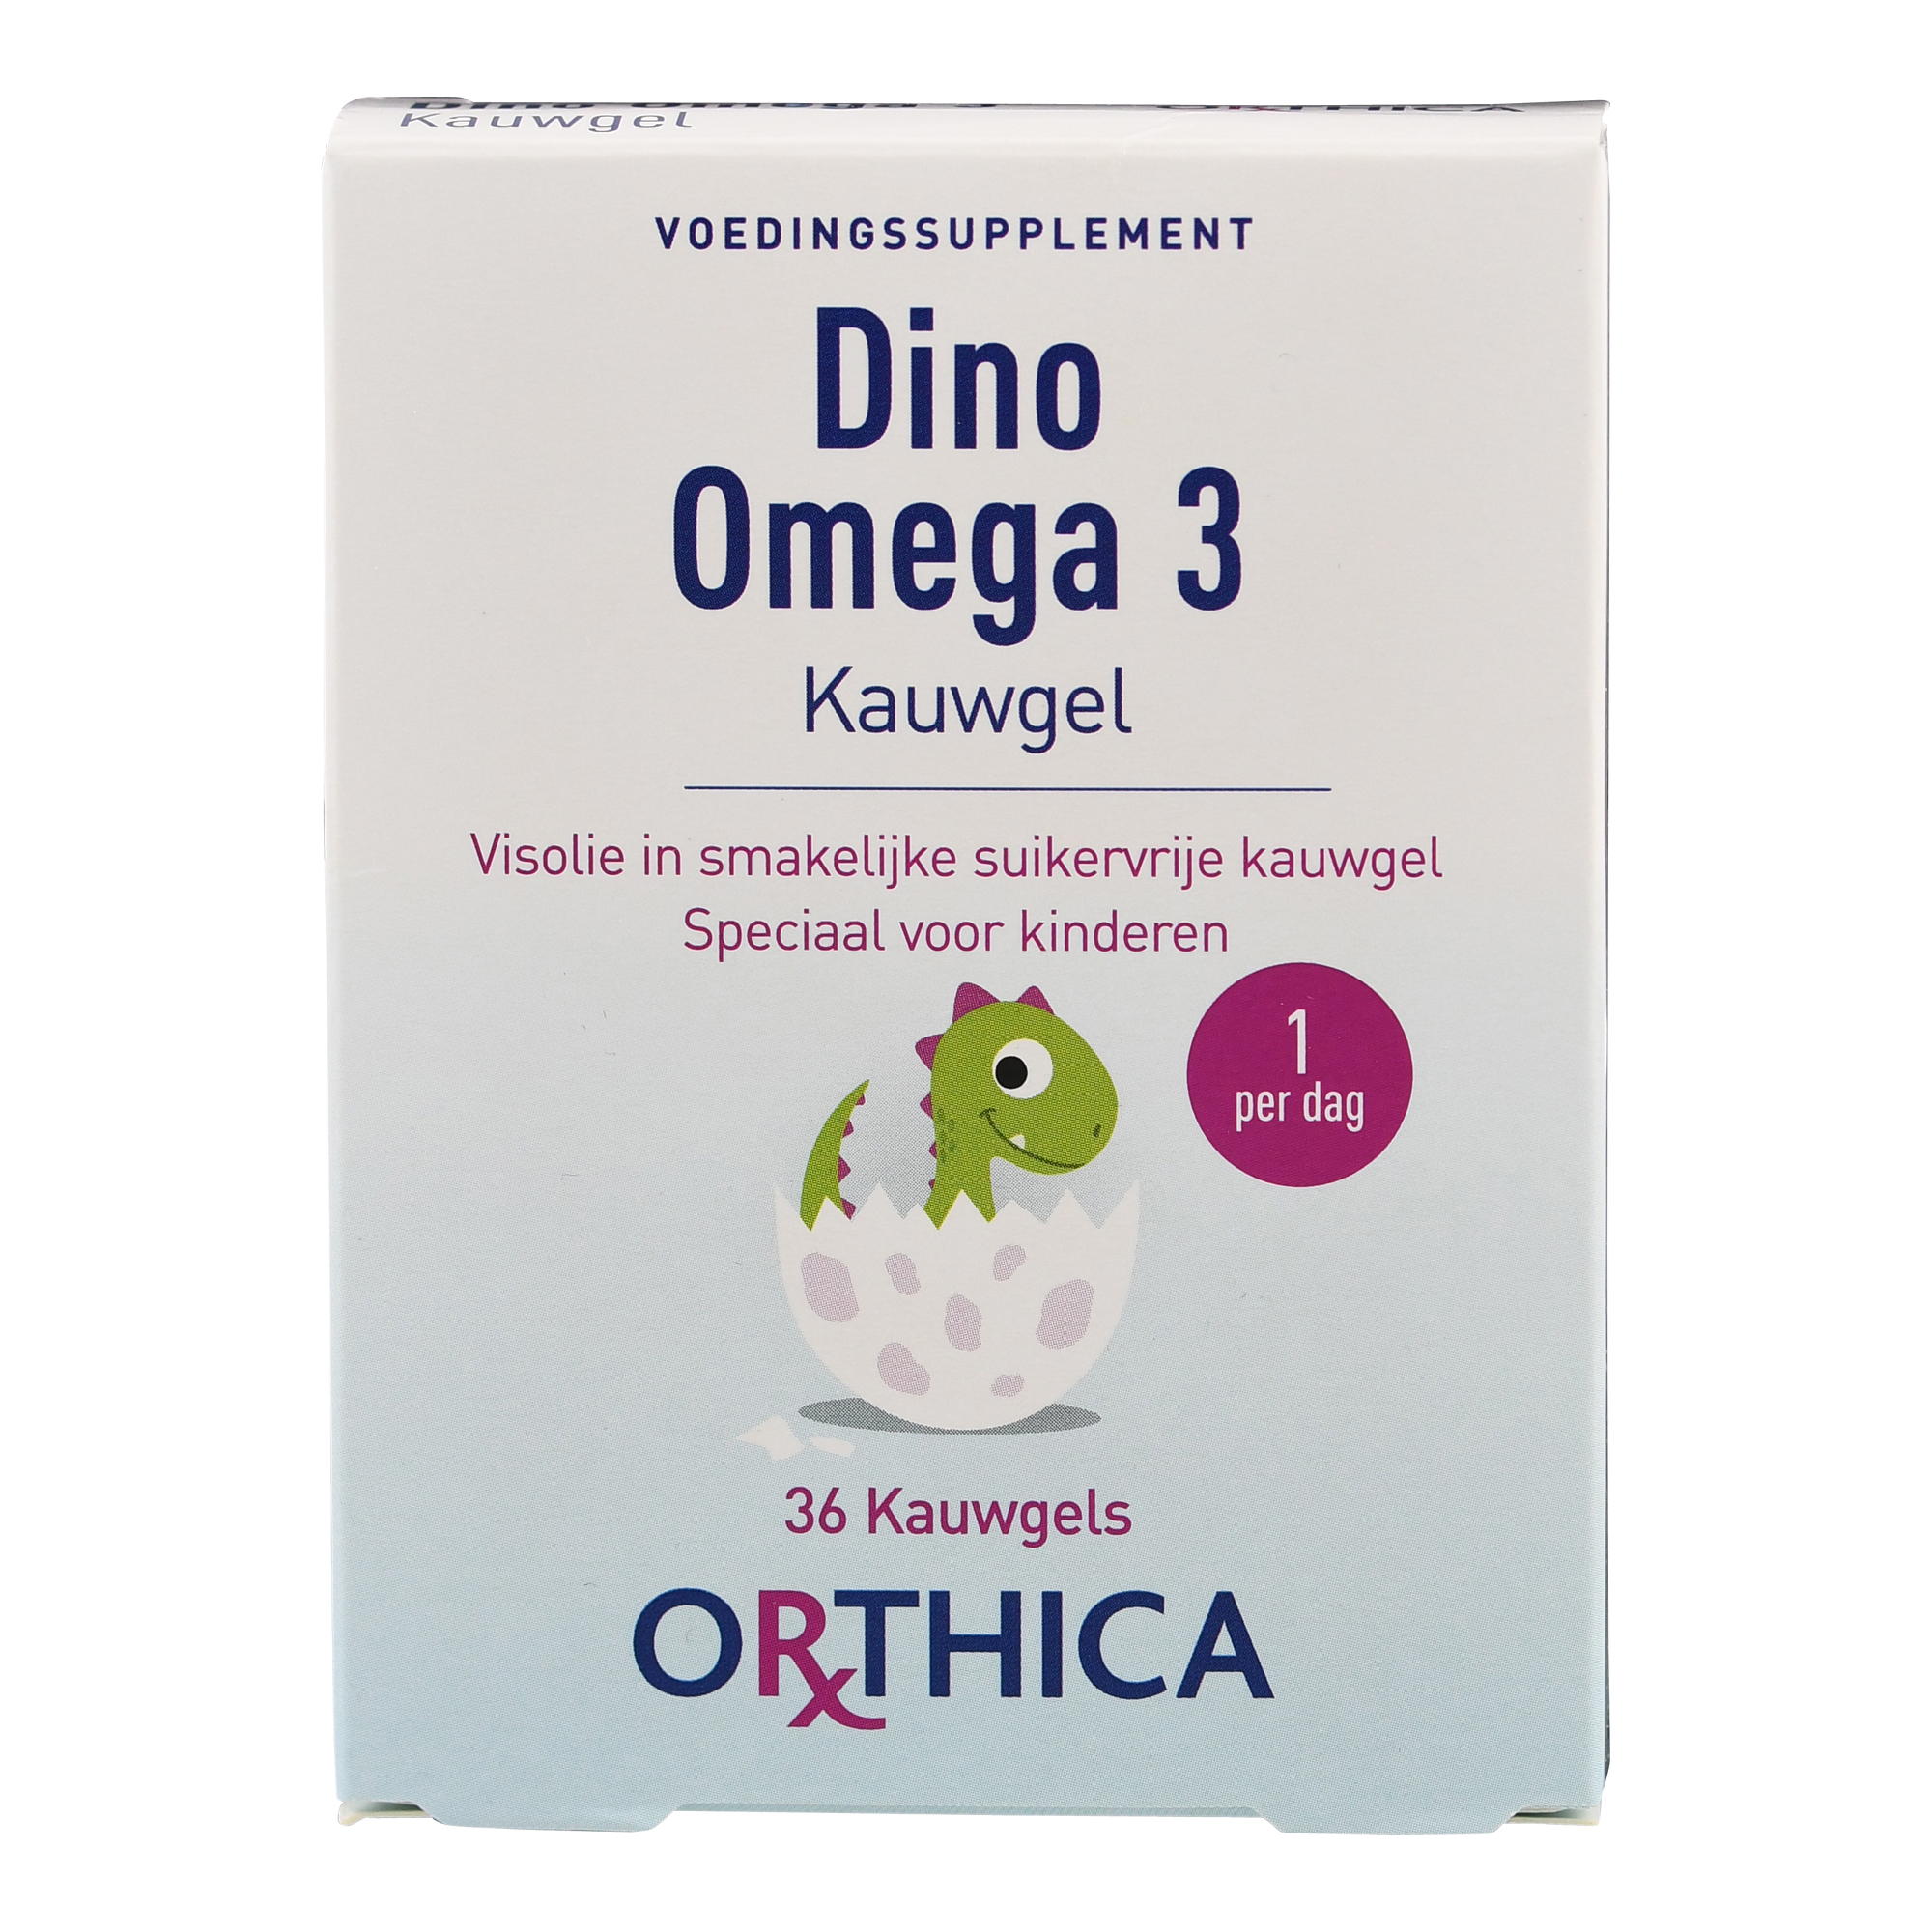 Dino Omega 3 von Orthica.